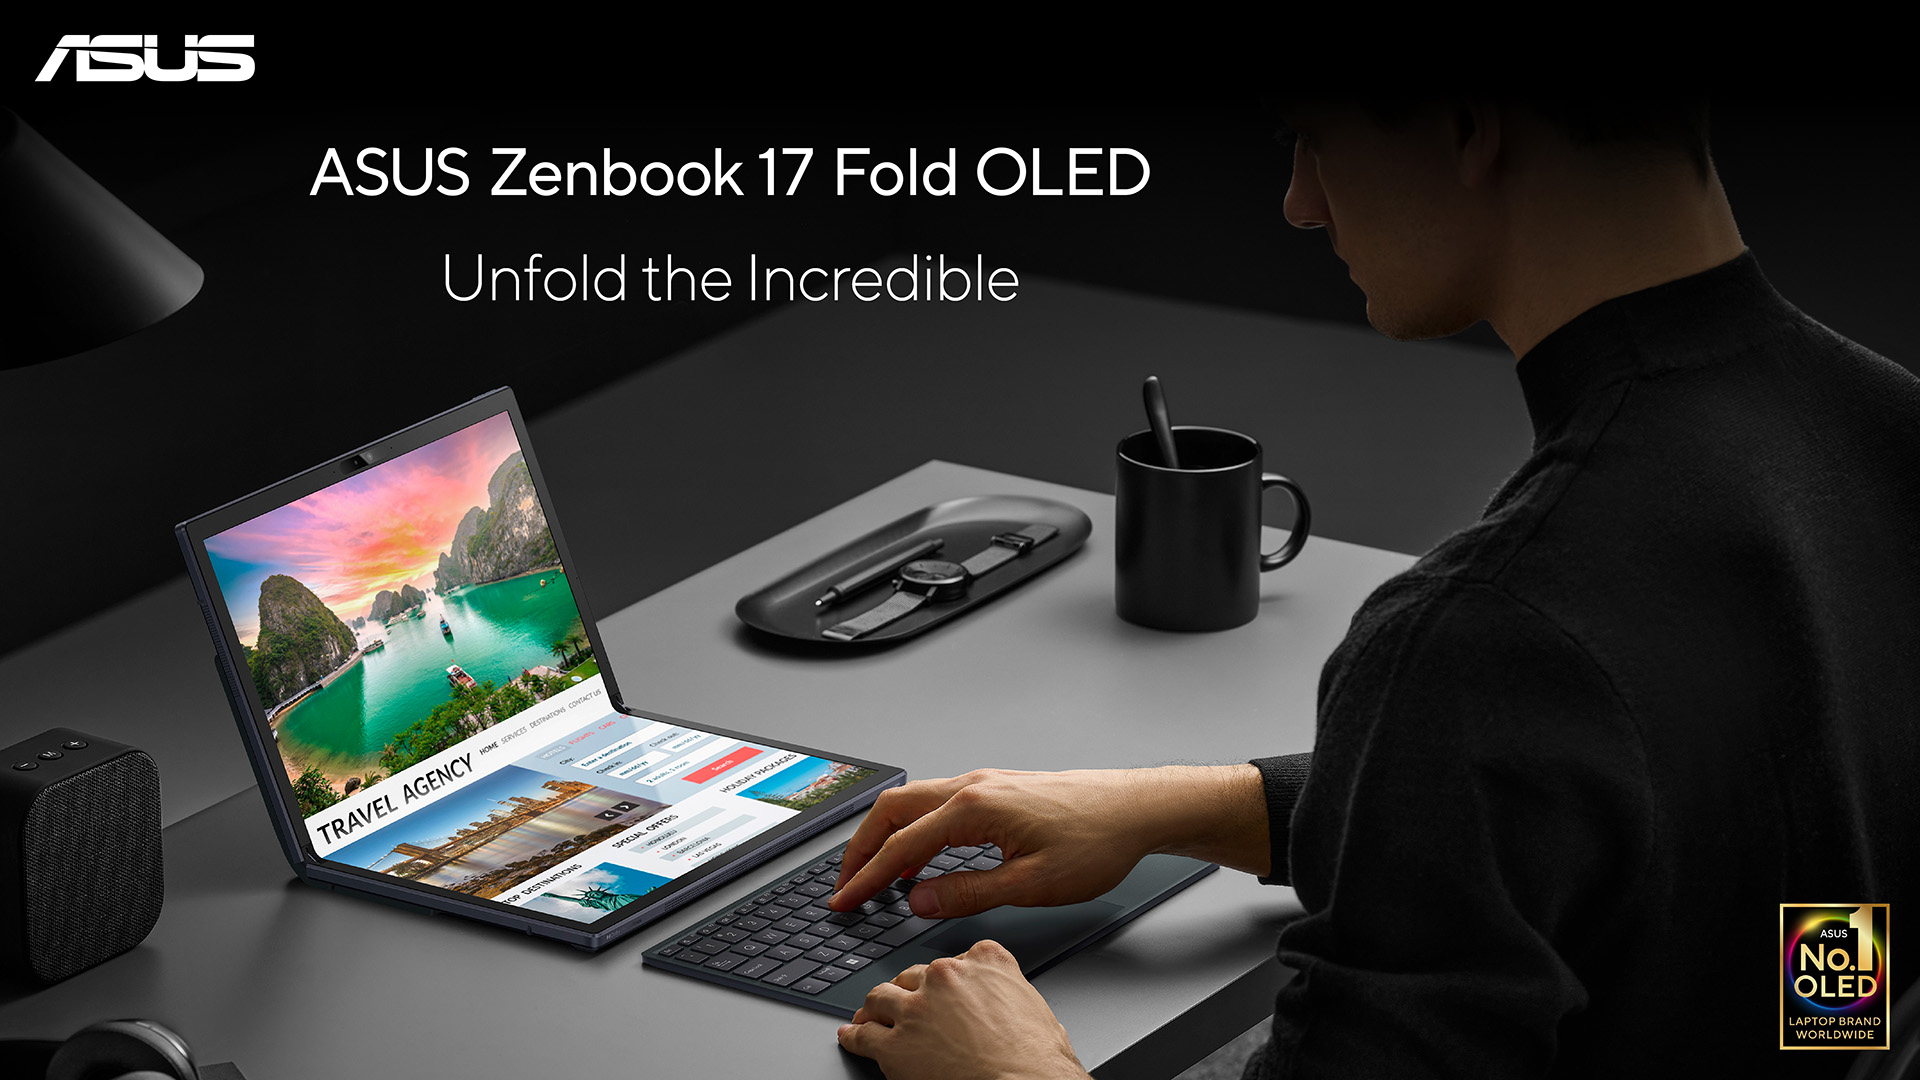 UX9702 02 | asus | พรีวิว พารู้จักโน๊ตบุ๊คจอพับได้ ASUS ZenBook17 Fold OLED มันทำอะไรได้บ้าง?